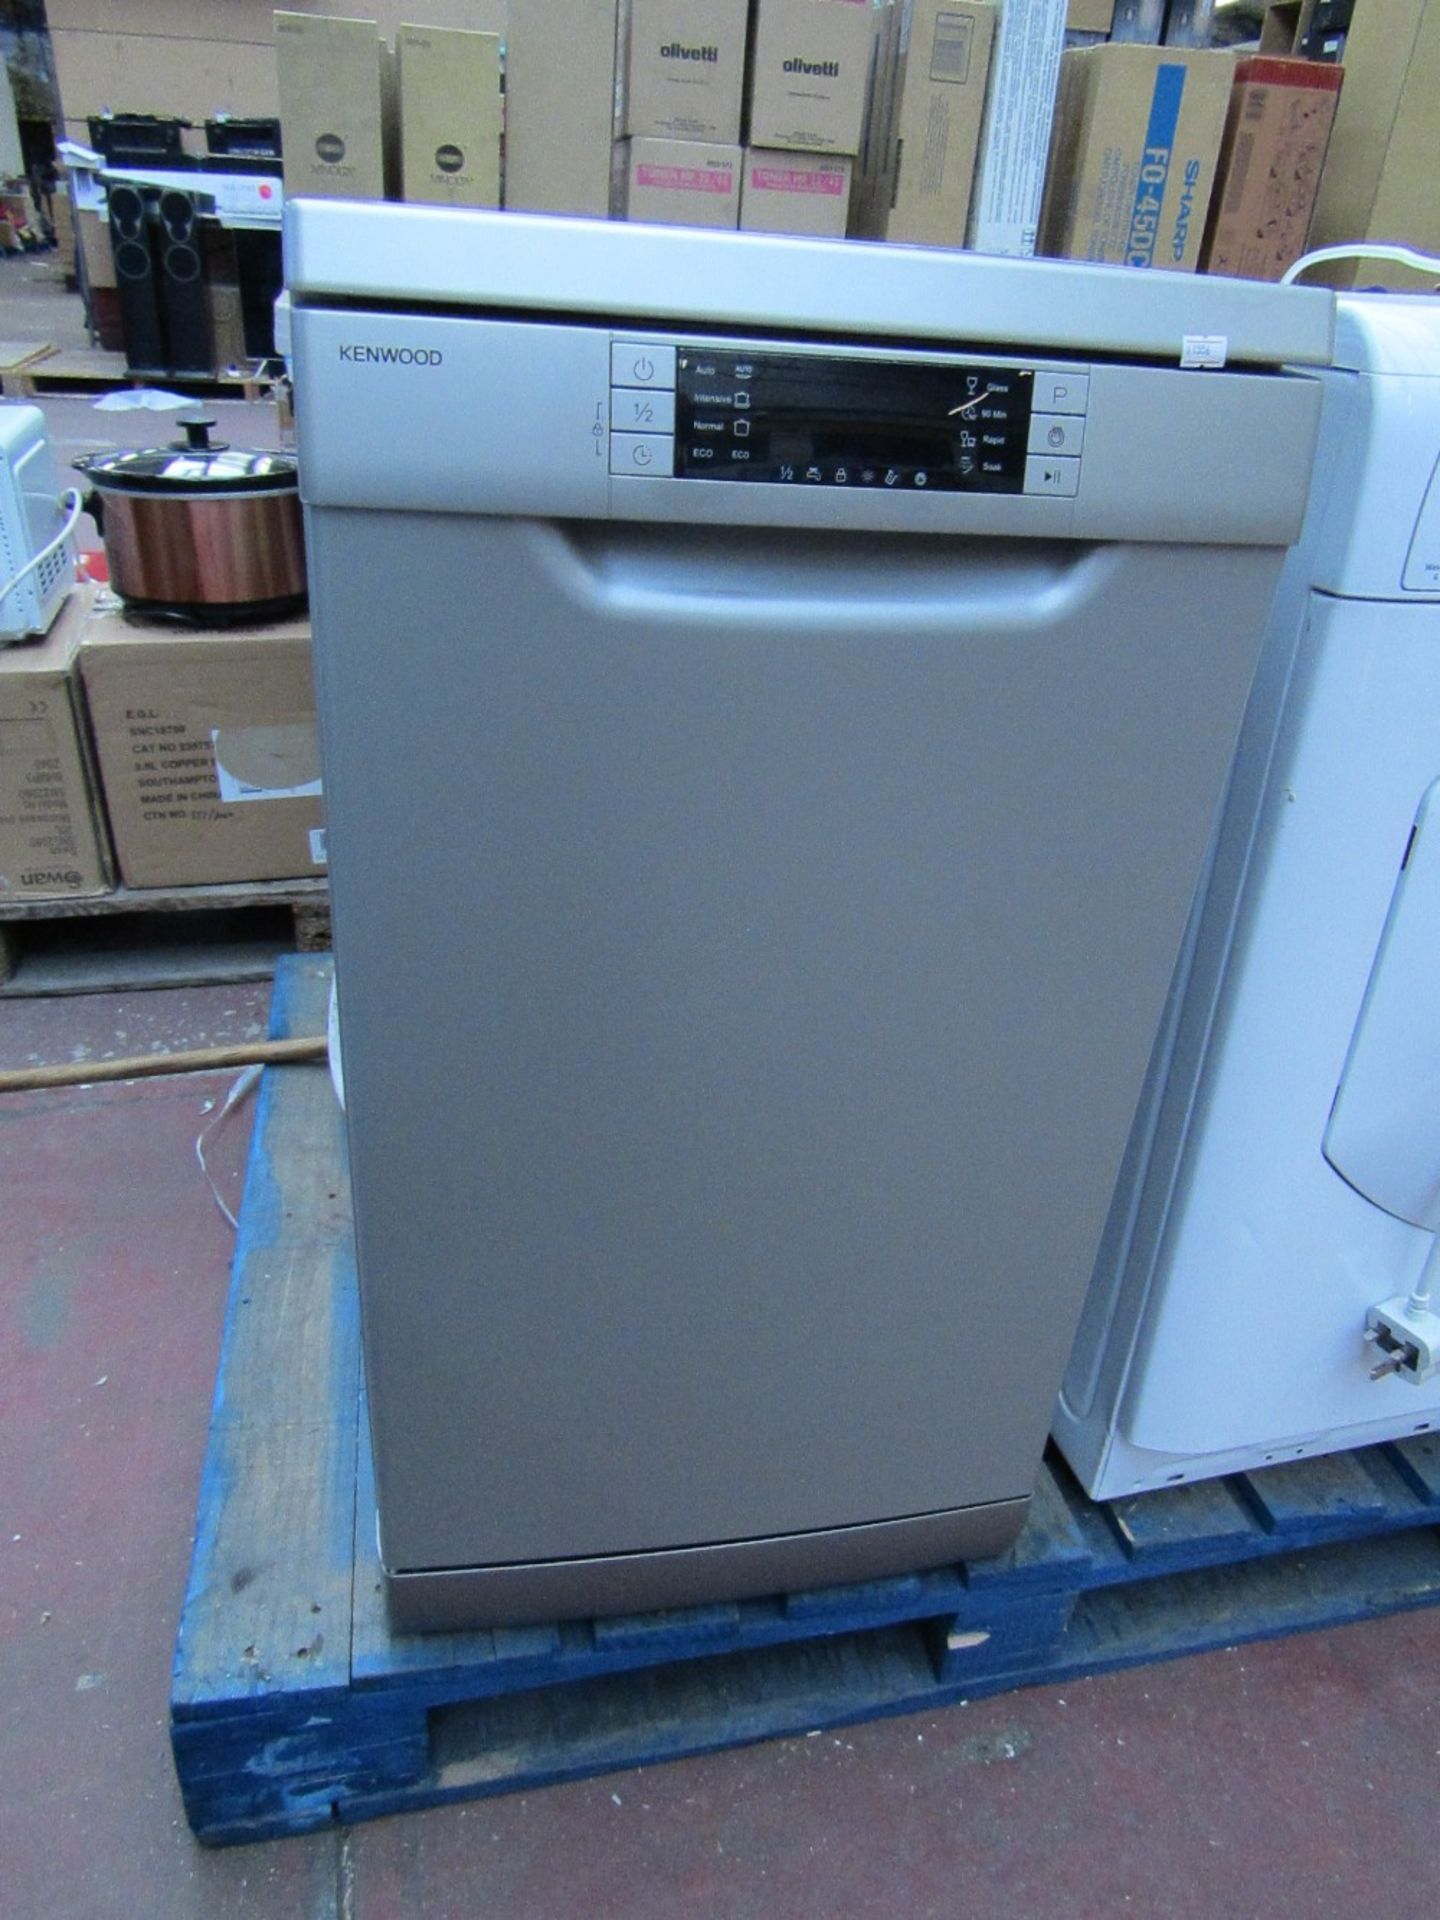 Kenwood 2100w slim dishwasher, (serial number: 1635 003522), powers on